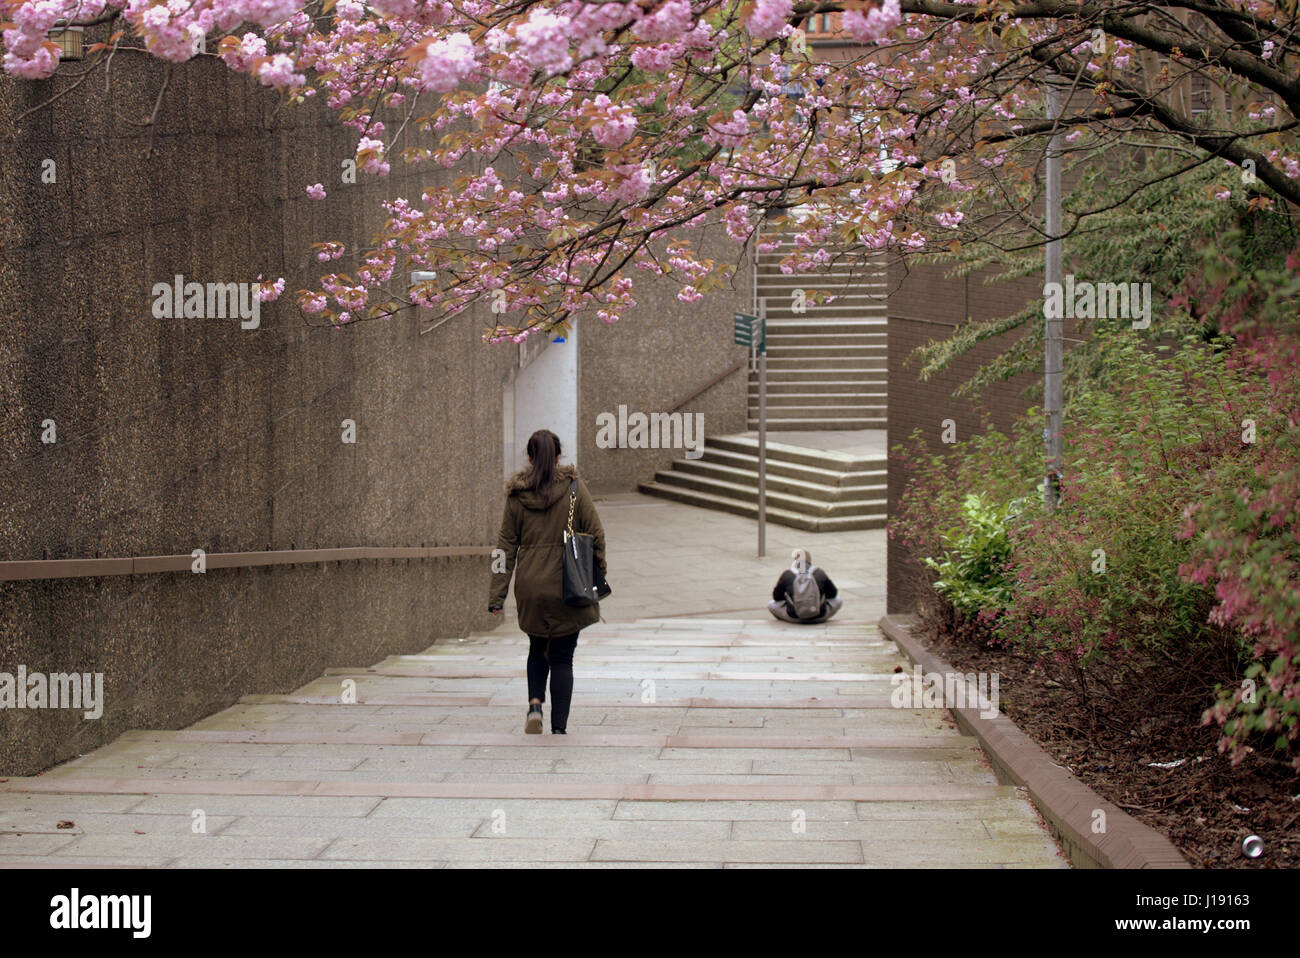 Glasgow George cross street scene pink cherry blossom springtime person walking cityscape Stock Photo